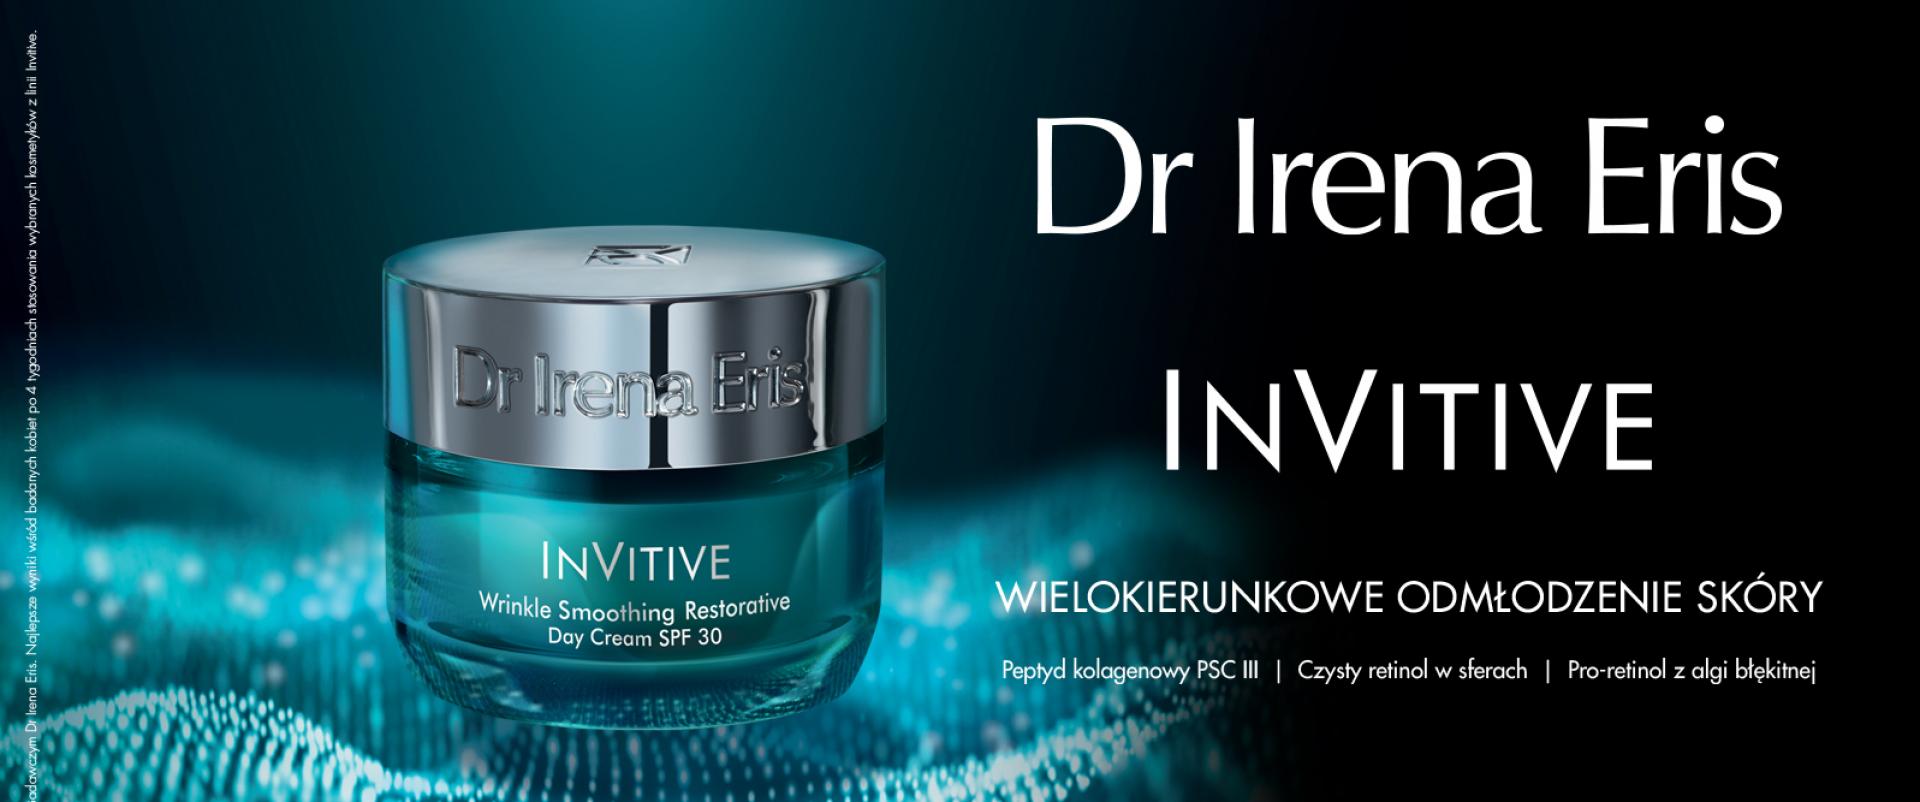 Dr Irena Eris: rewitalizacja skóry z InVitive